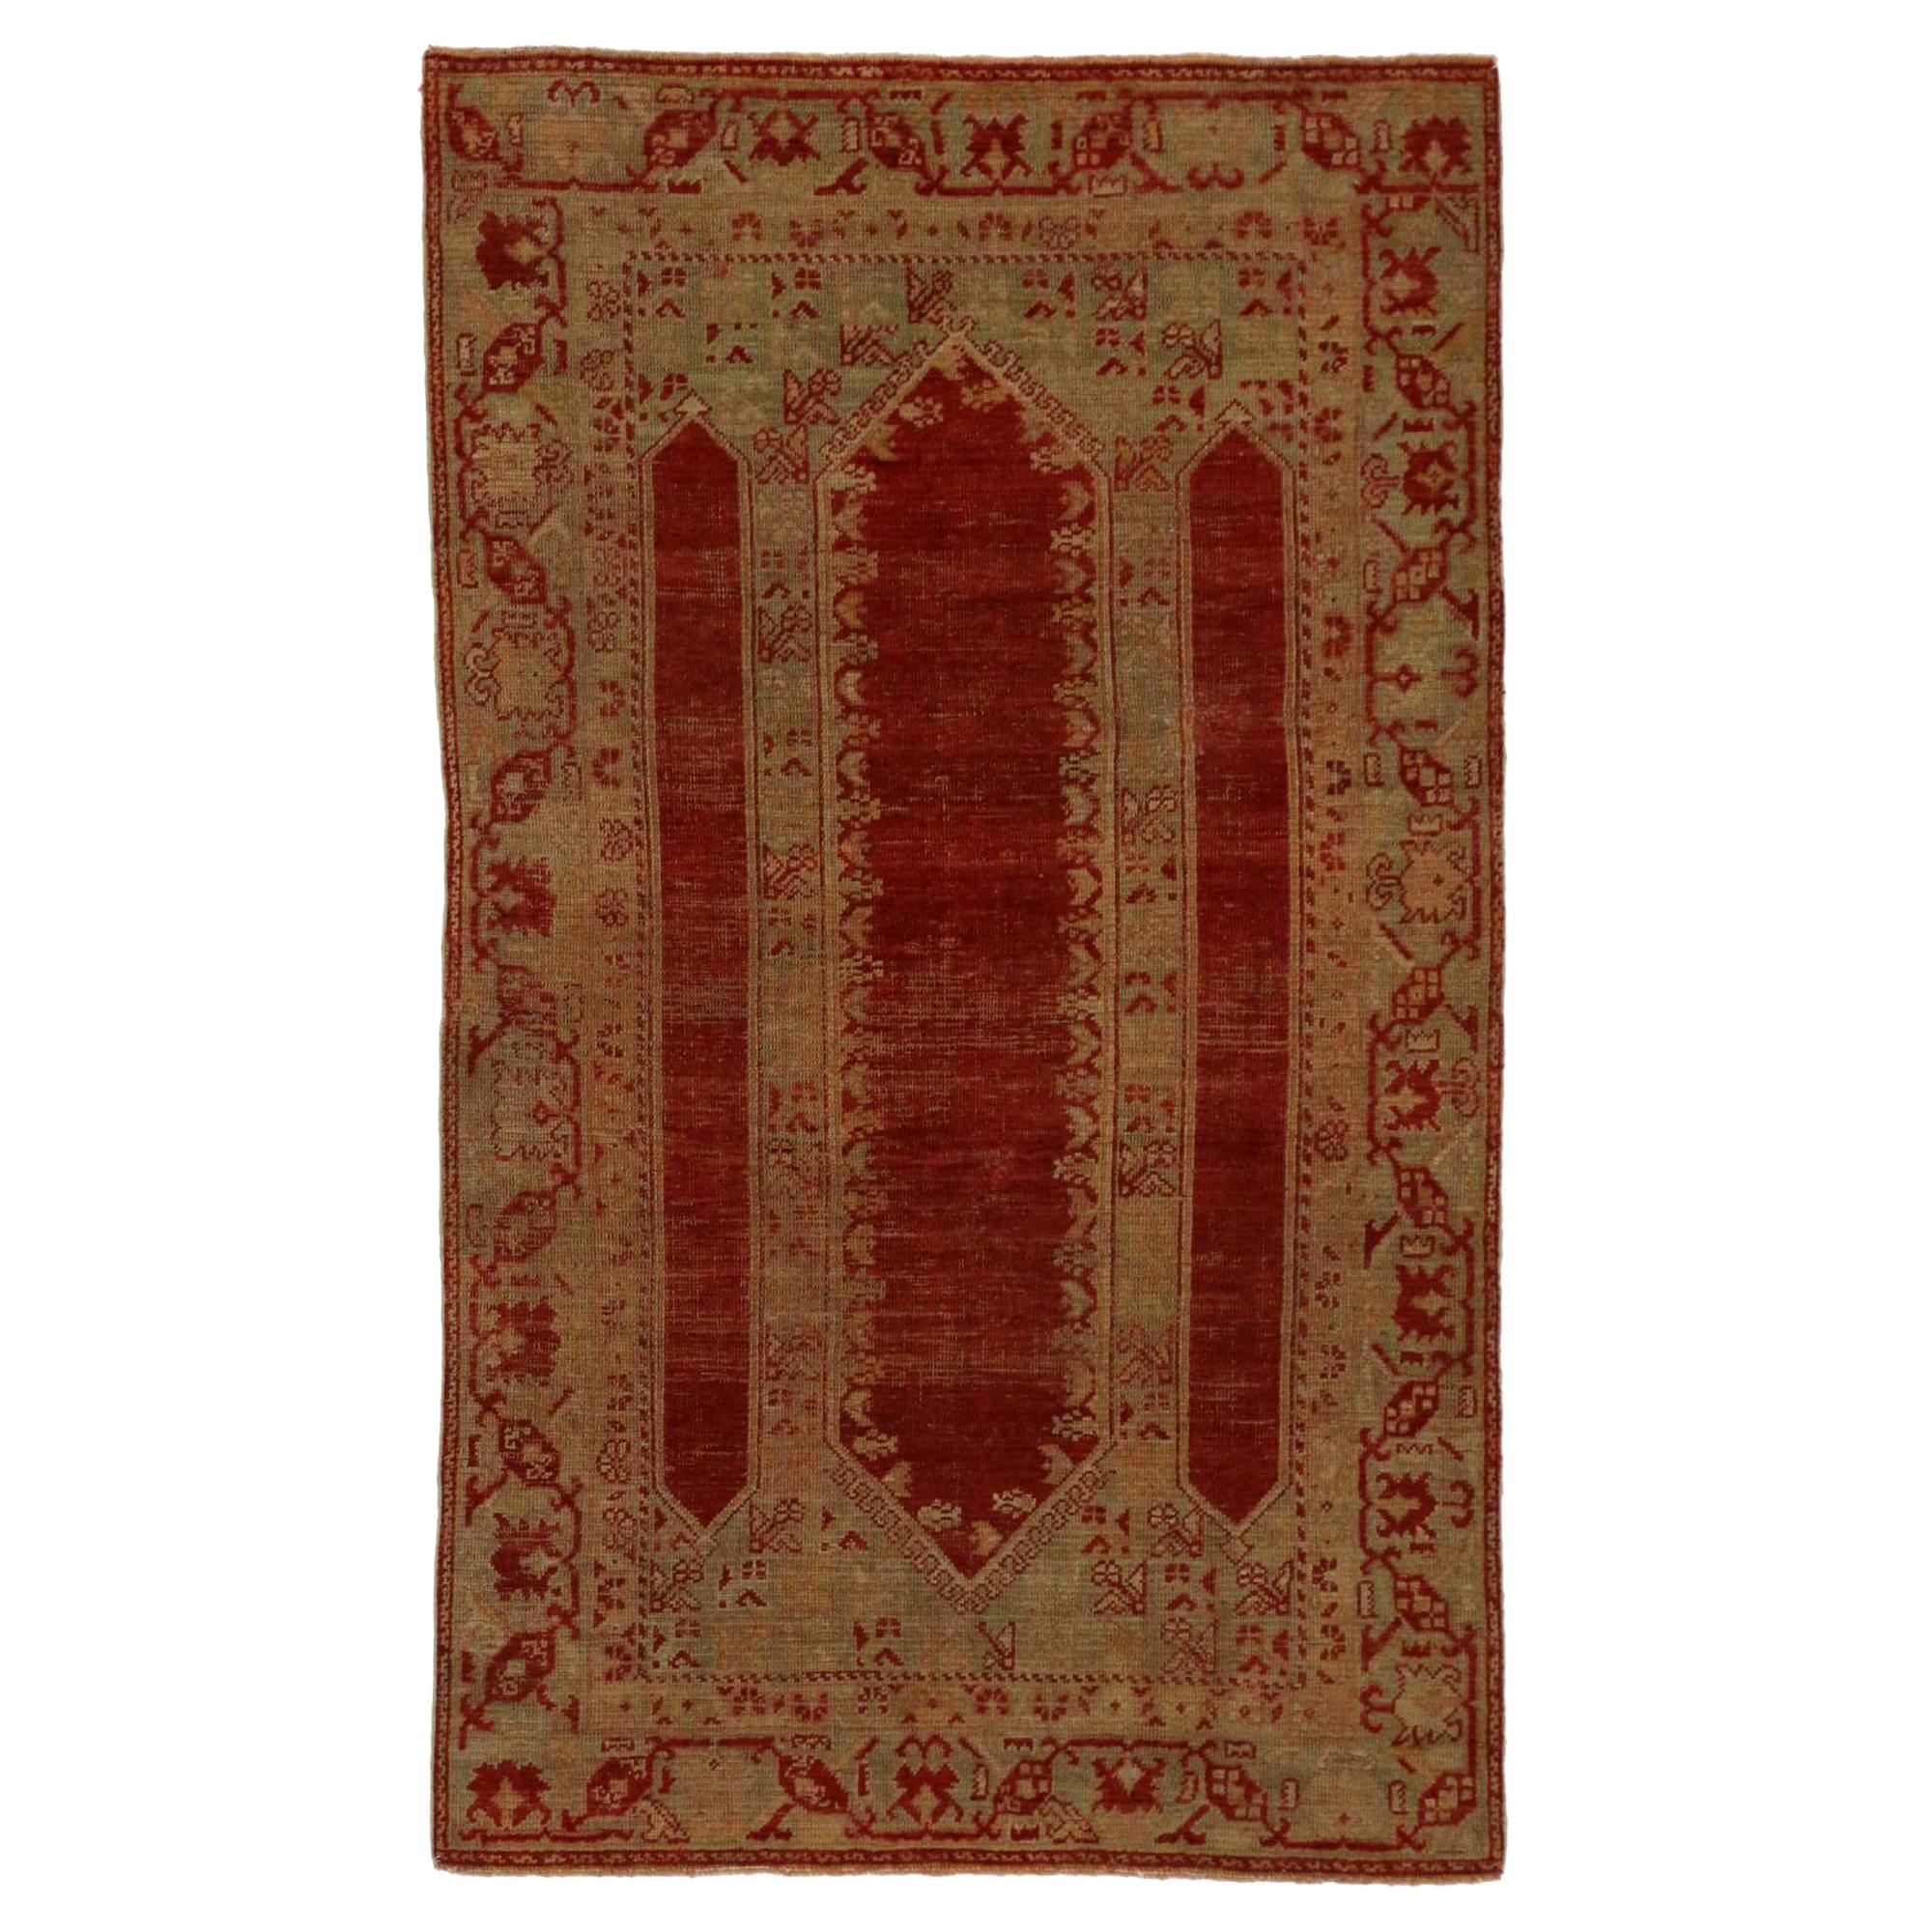 Red Turkish Prayer Mat Rug Carpet New Large Size Ottoman Design 